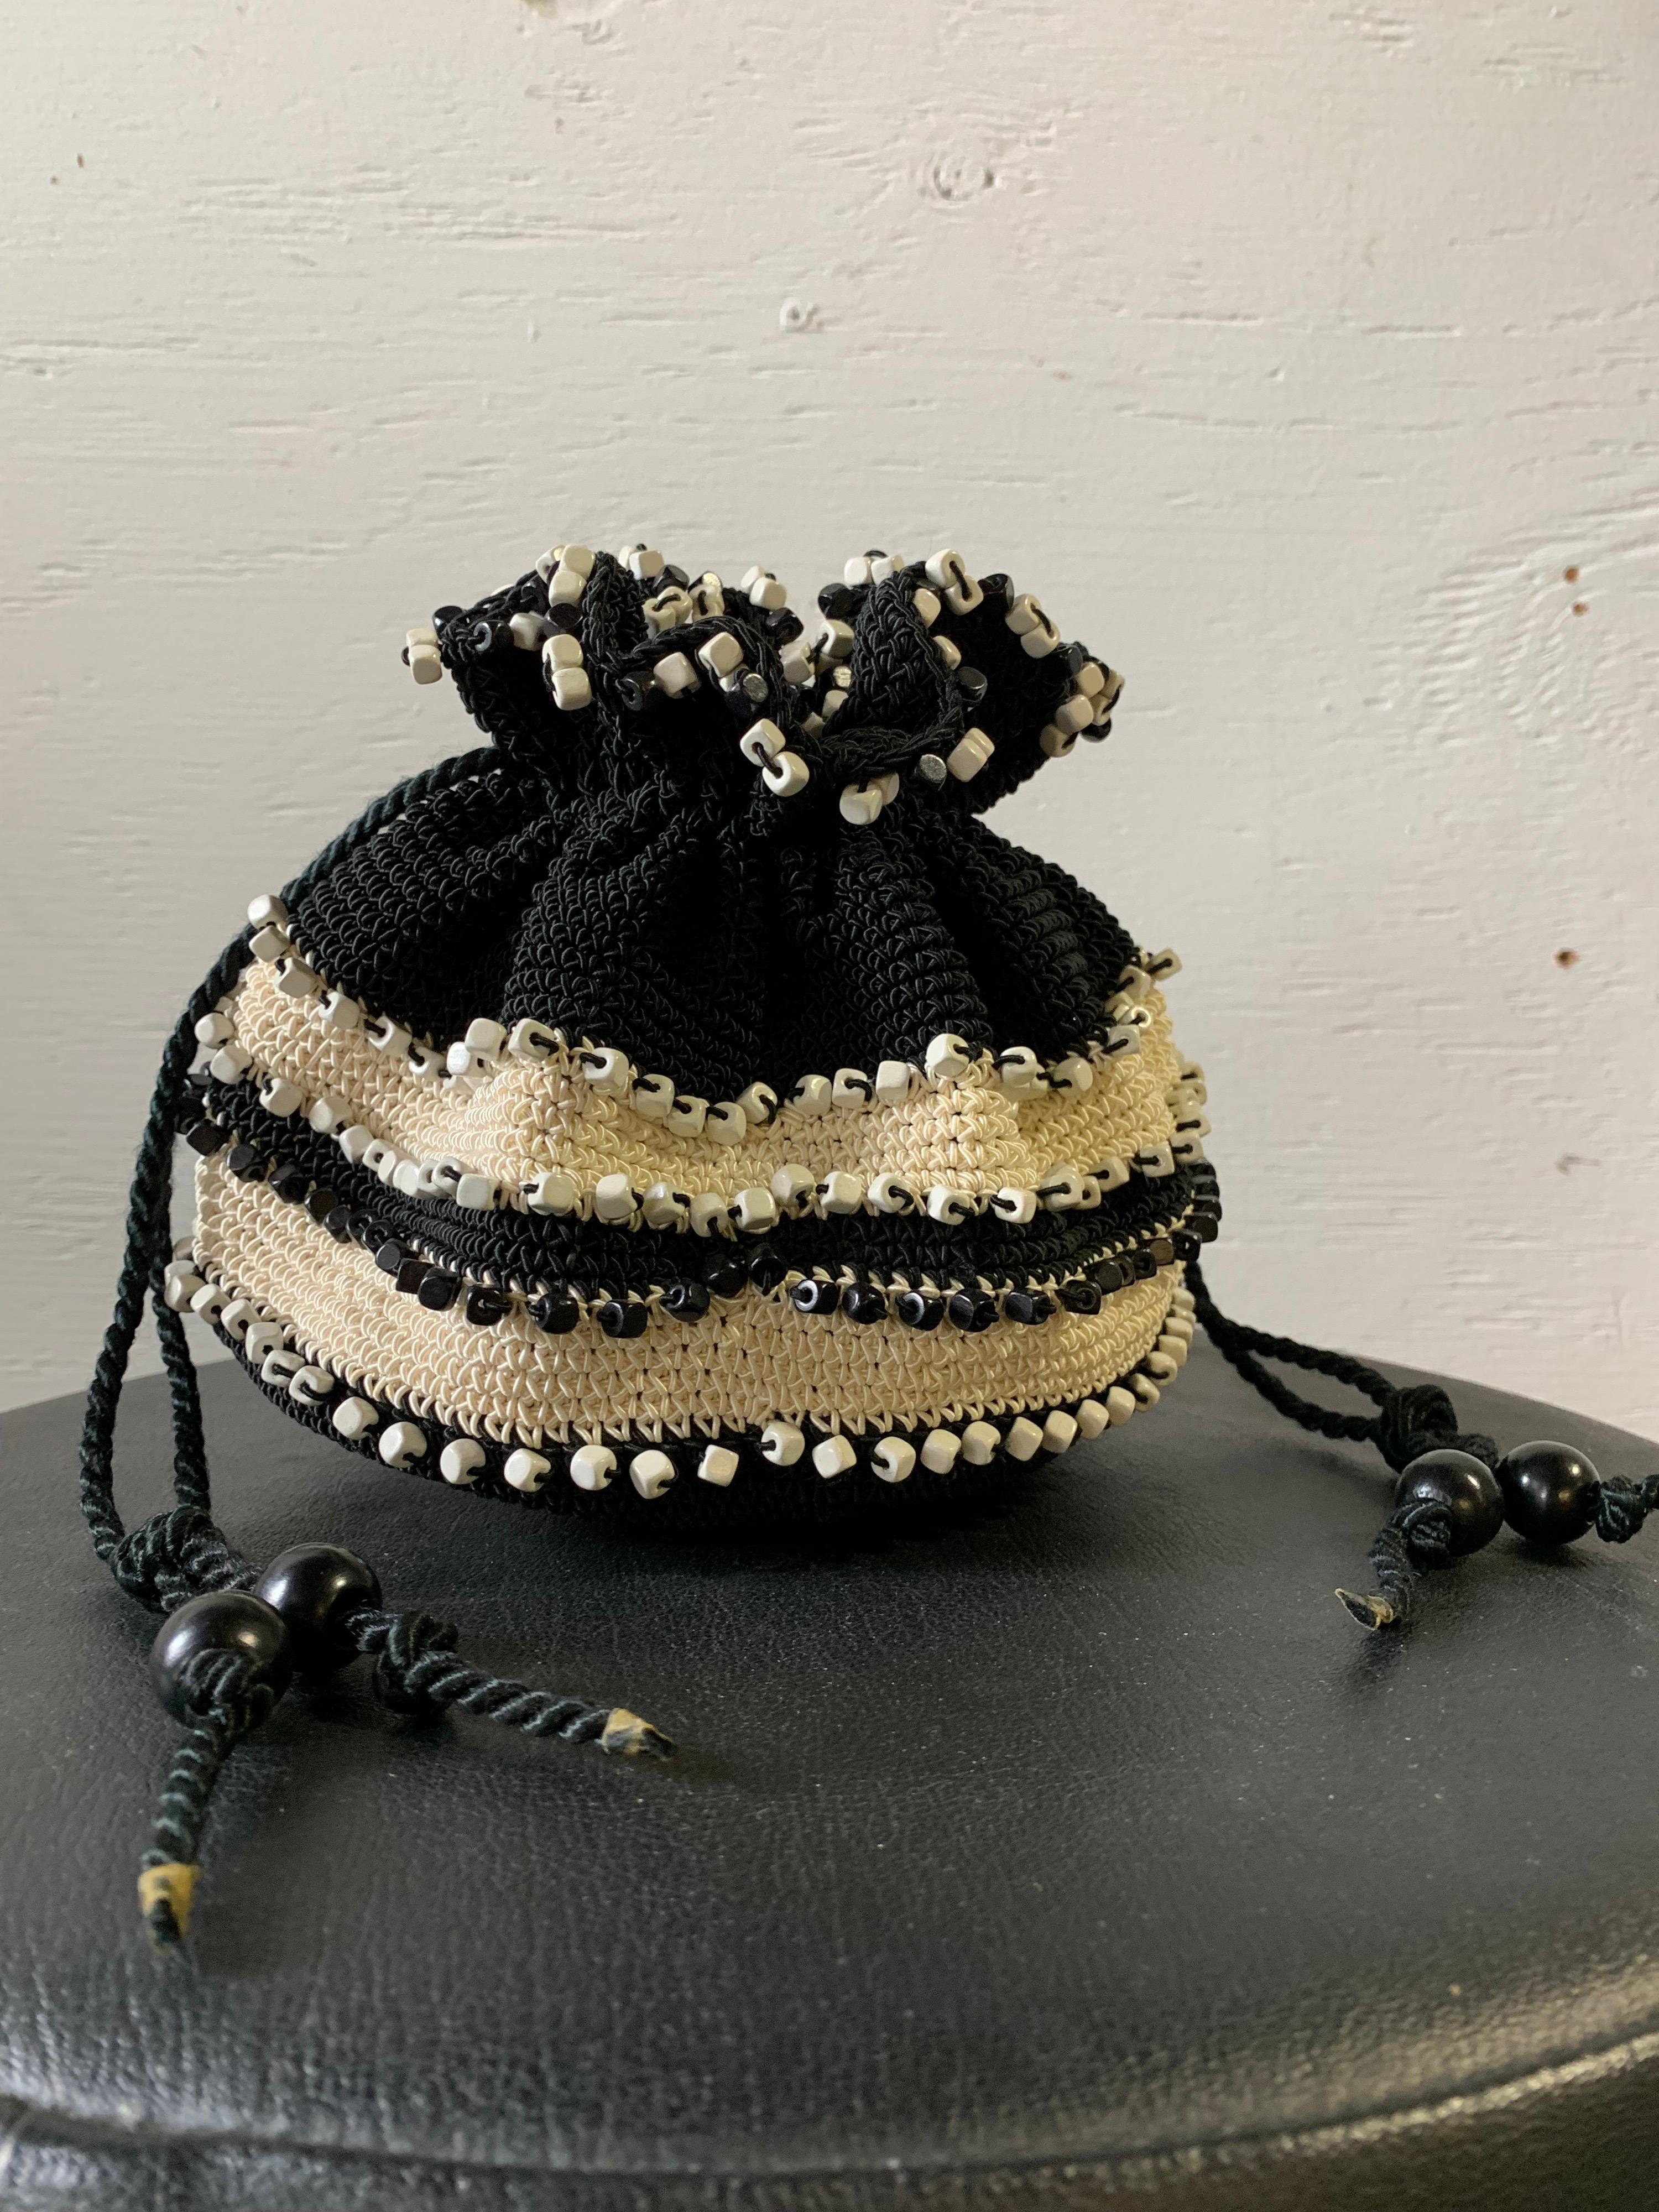 1950s Black & Cream Crochet Drawstring Pouch Handtasche W Stripes & Square Beads. Boden aus Bullseye-Harz. 